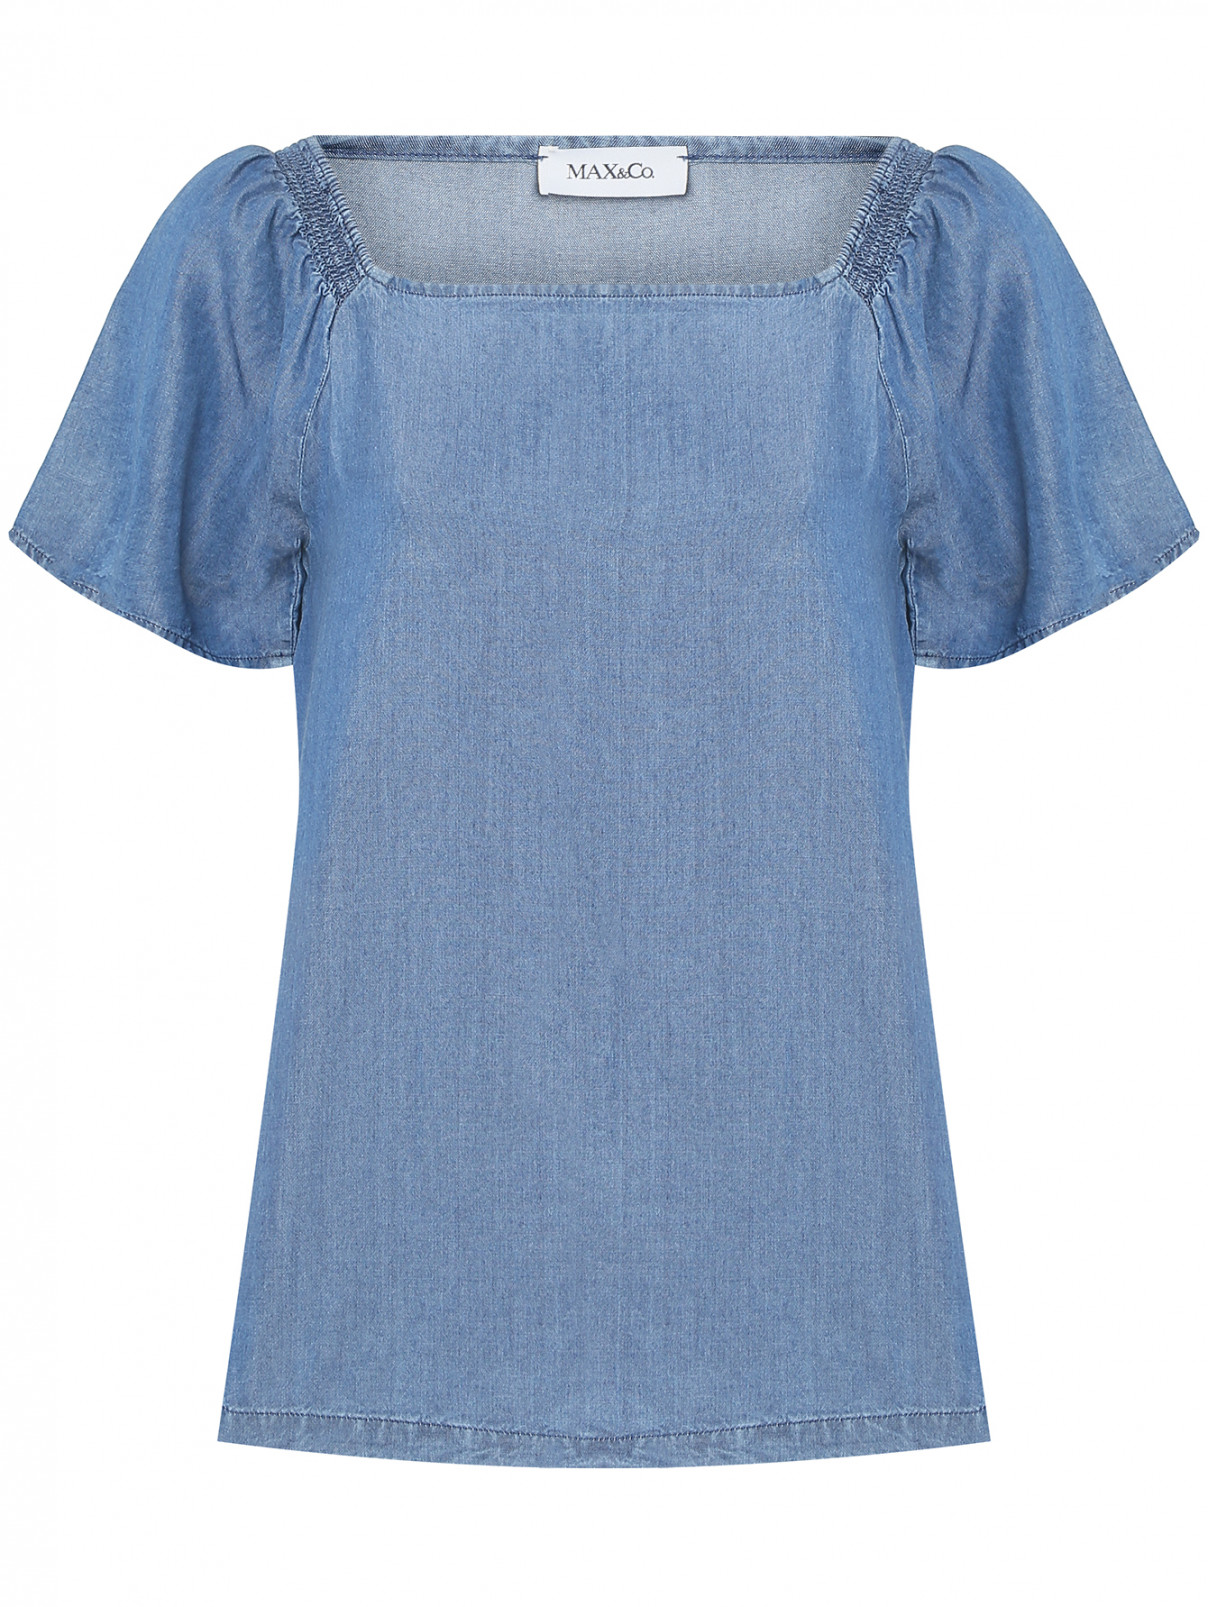 Блуза со спущенными плечами Max&Co  –  Общий вид